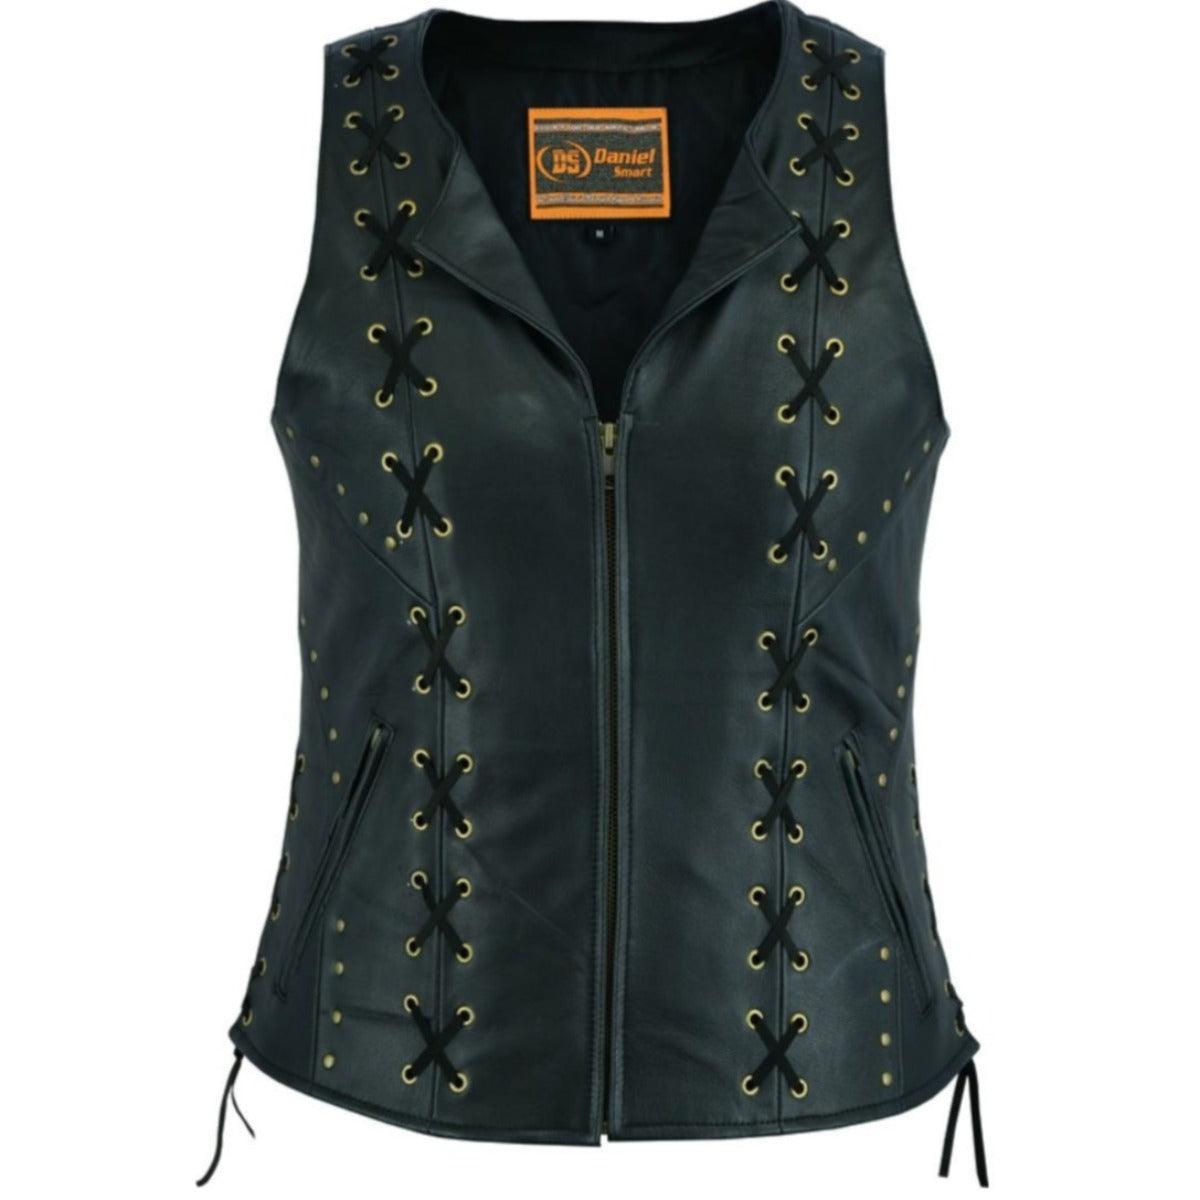 Daniel Smart Women's Zippered Leather Vest w/ Lacing Details, Black - American Legend Rider